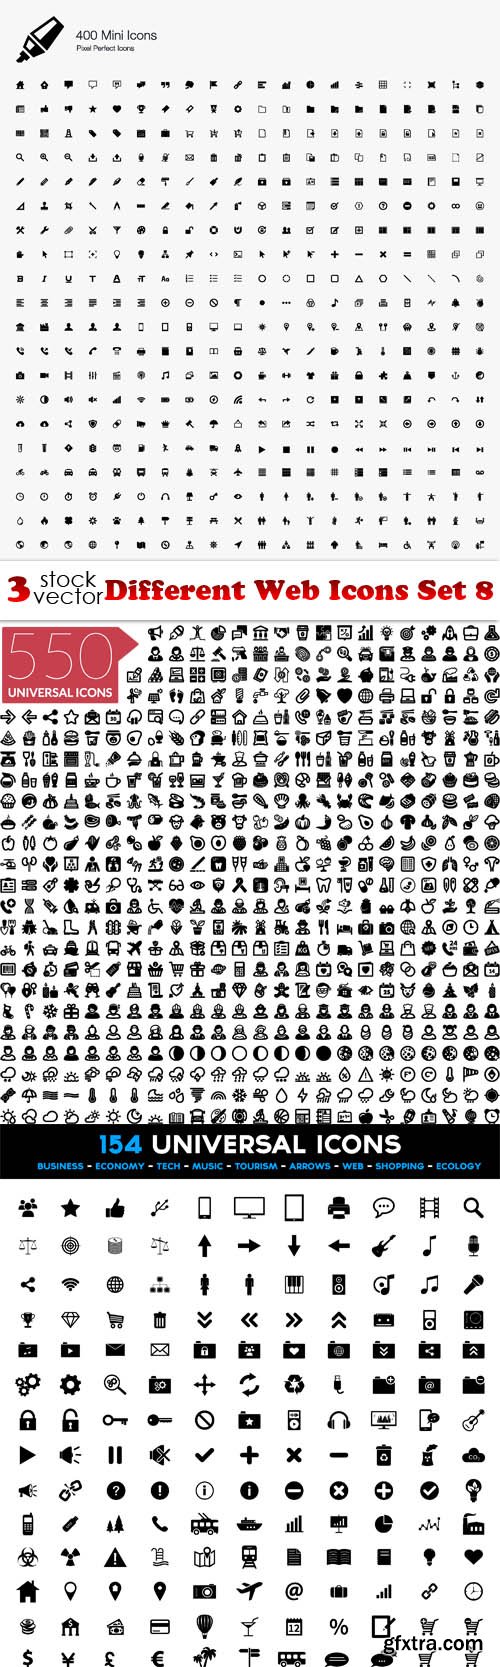 Vectors - Different Web Icons Set 8